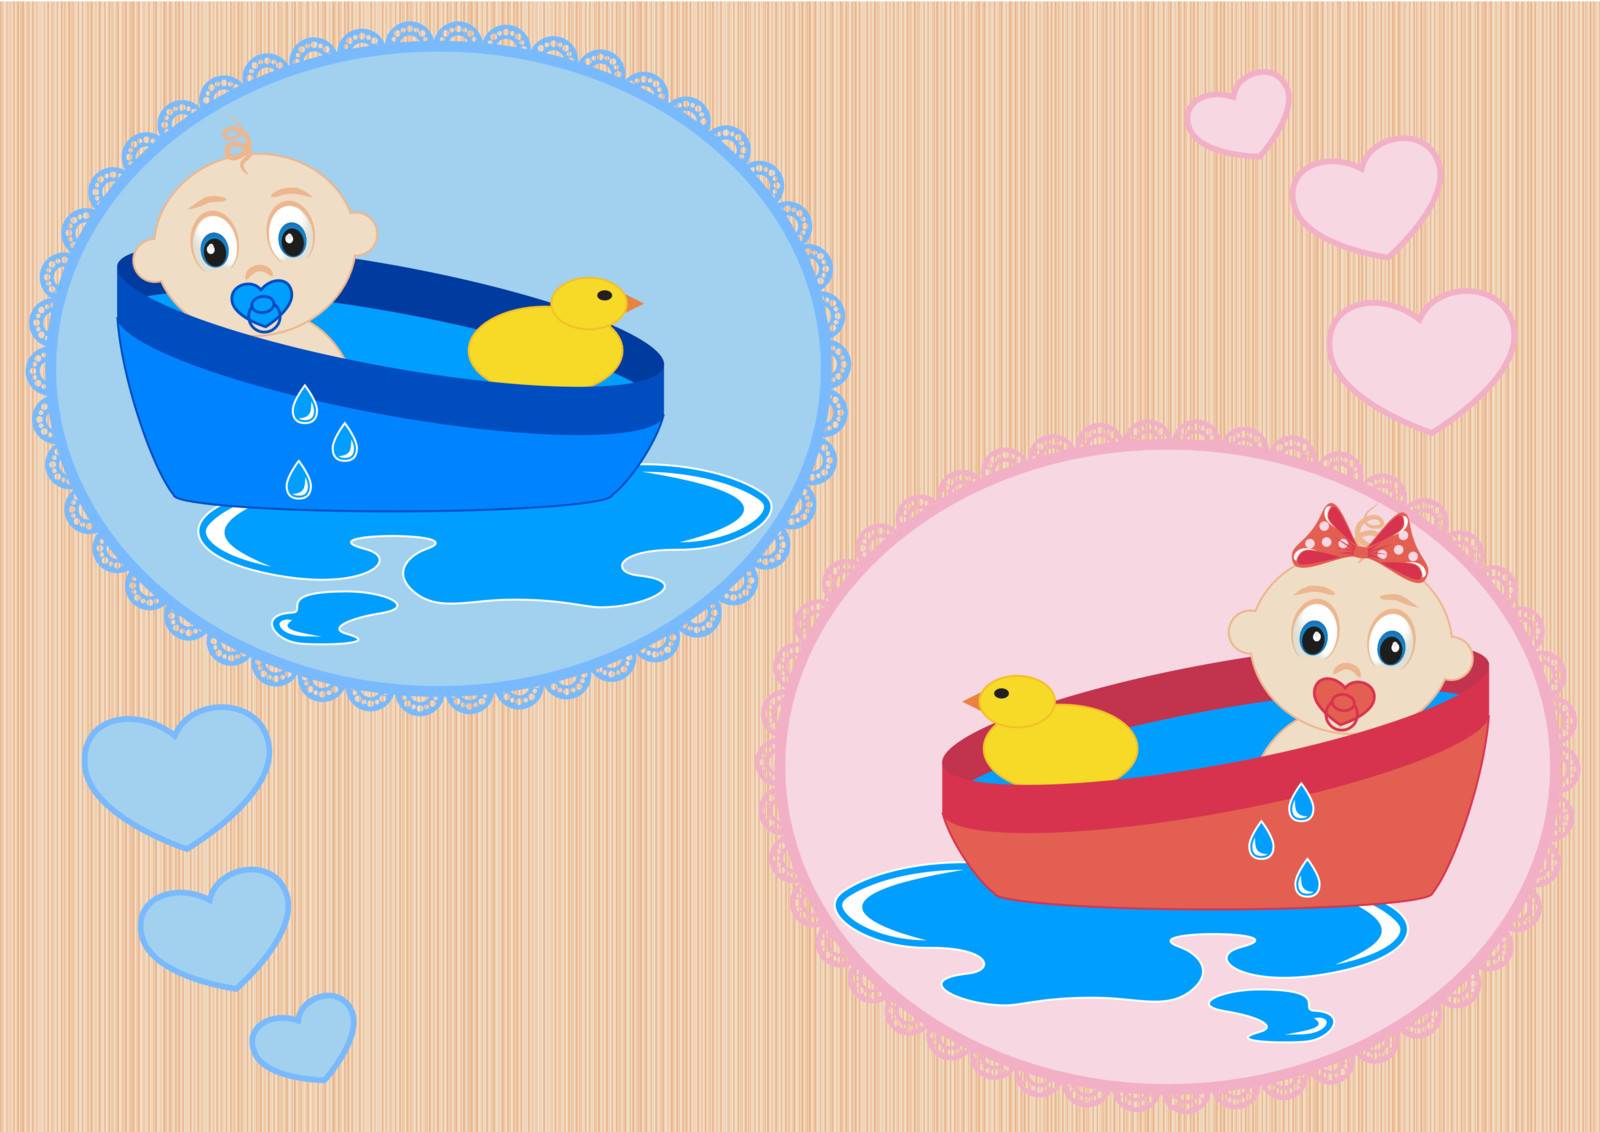 Children bathe in the bath with toy duck